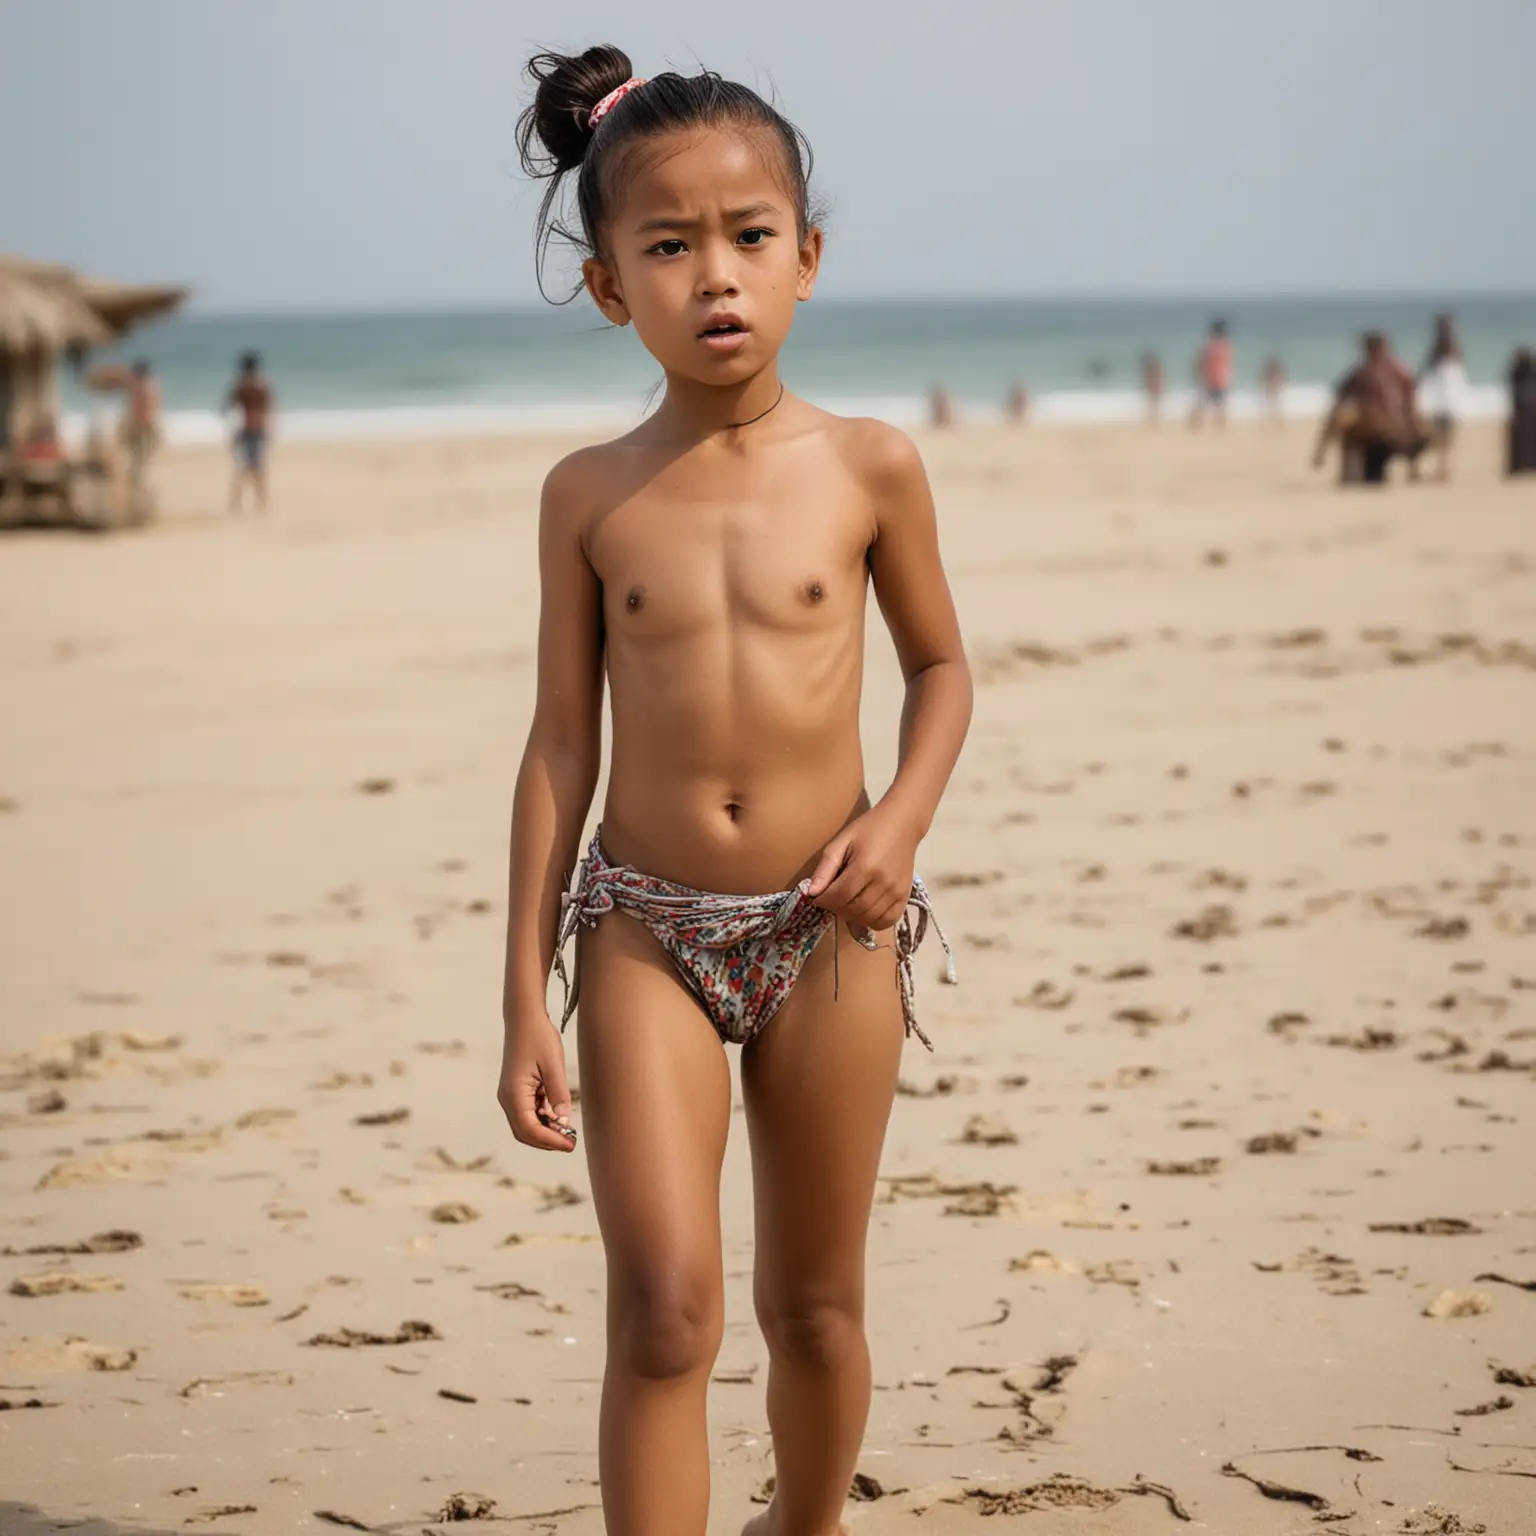 seorang wanita Indonesia berusia 8 tahun, berjalan di atas pasir, rambut dikepang, menungging, mengenakan bikini.